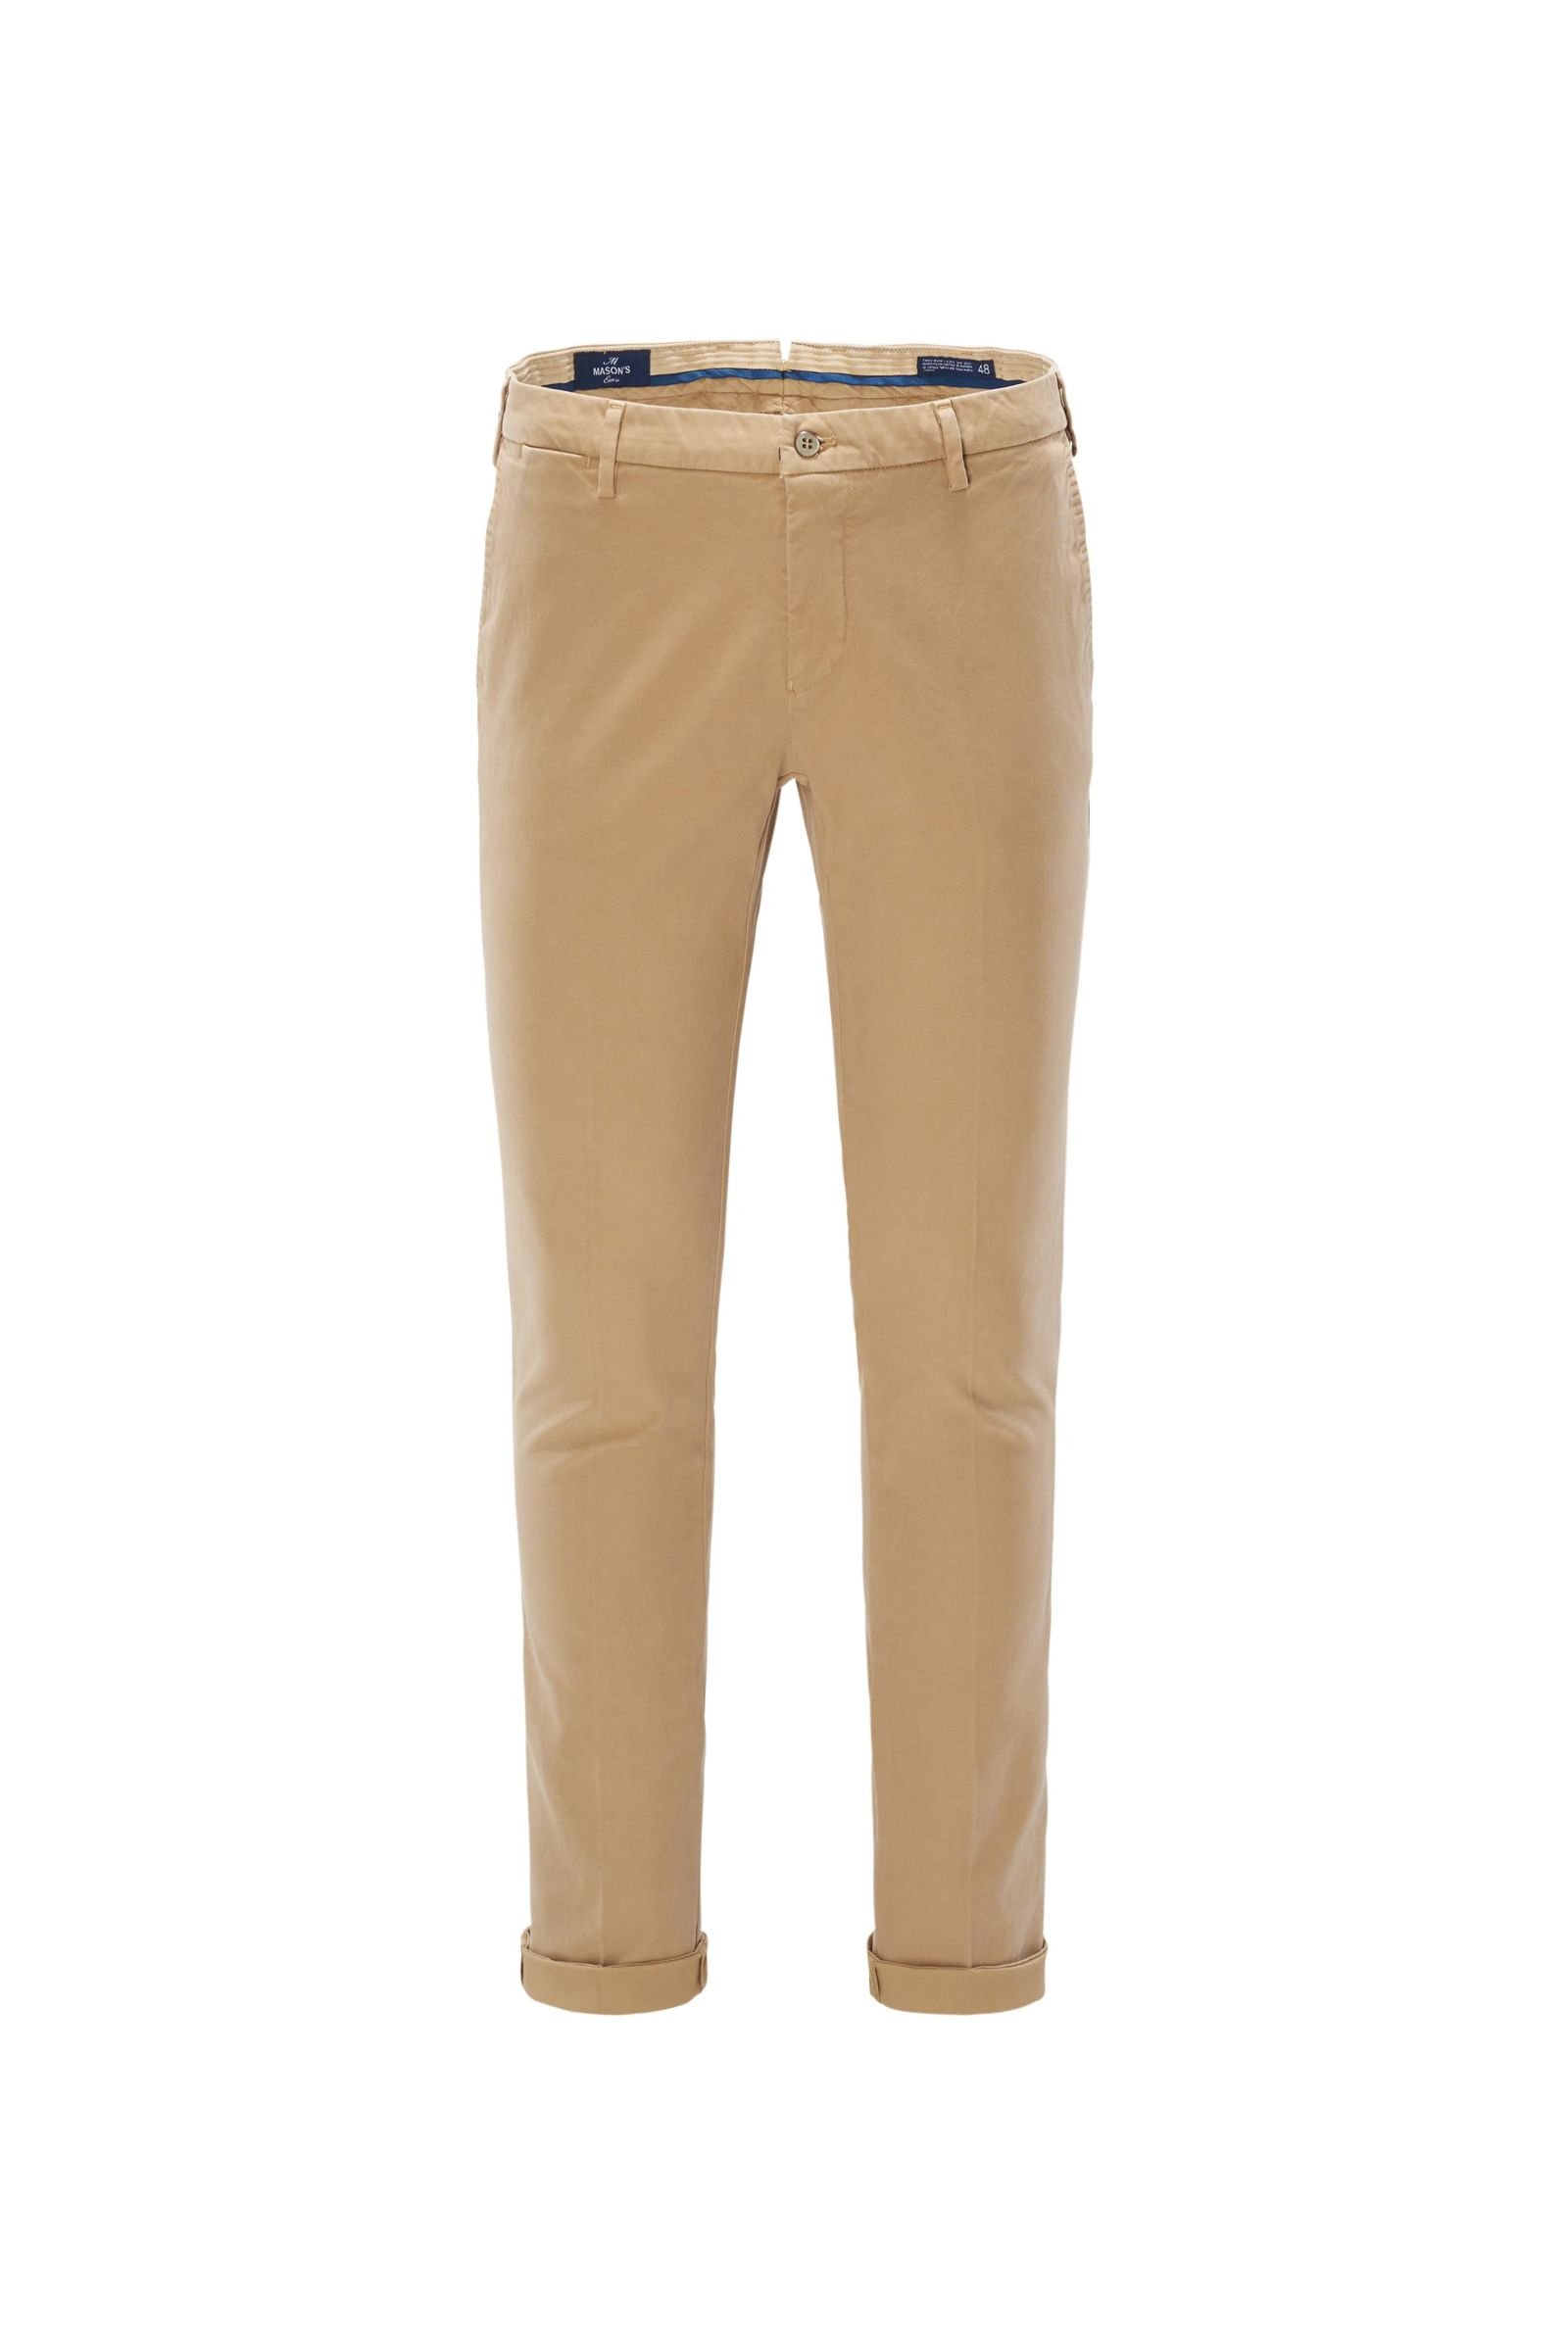 Cotton trousers 'Forte dei Marmi' light brown